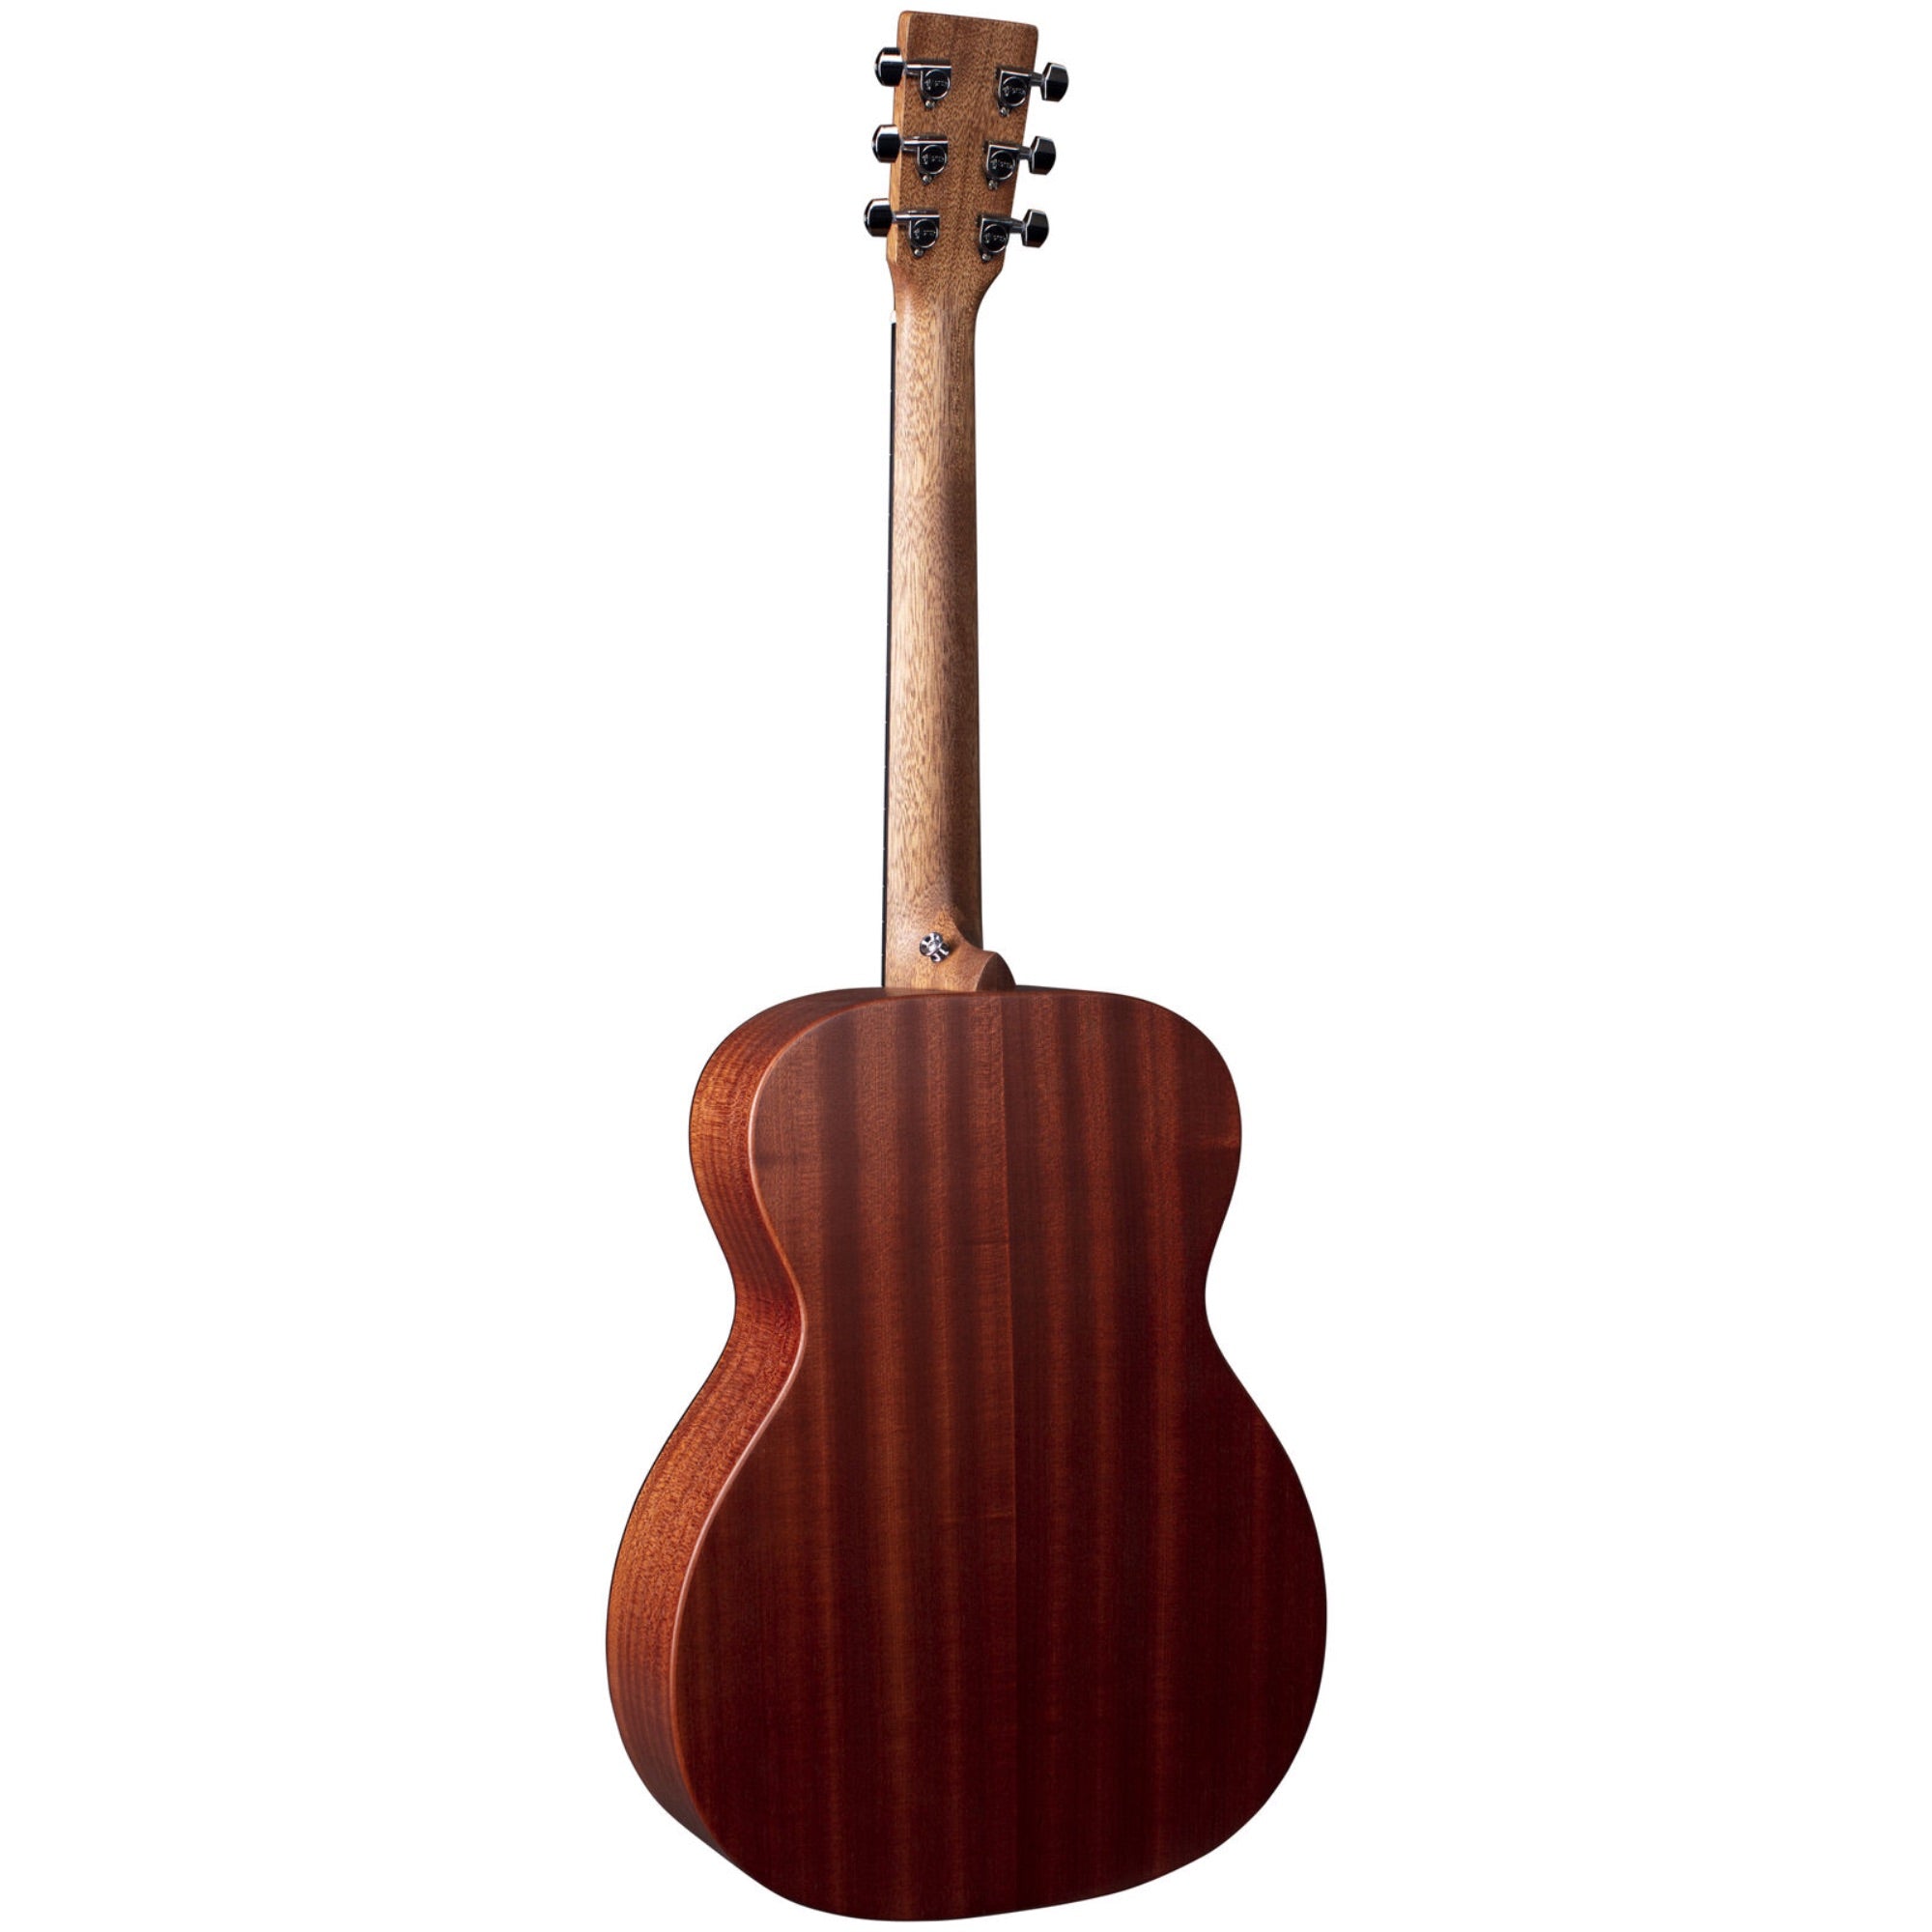 Martin 000JR10 Acoustic Guitar